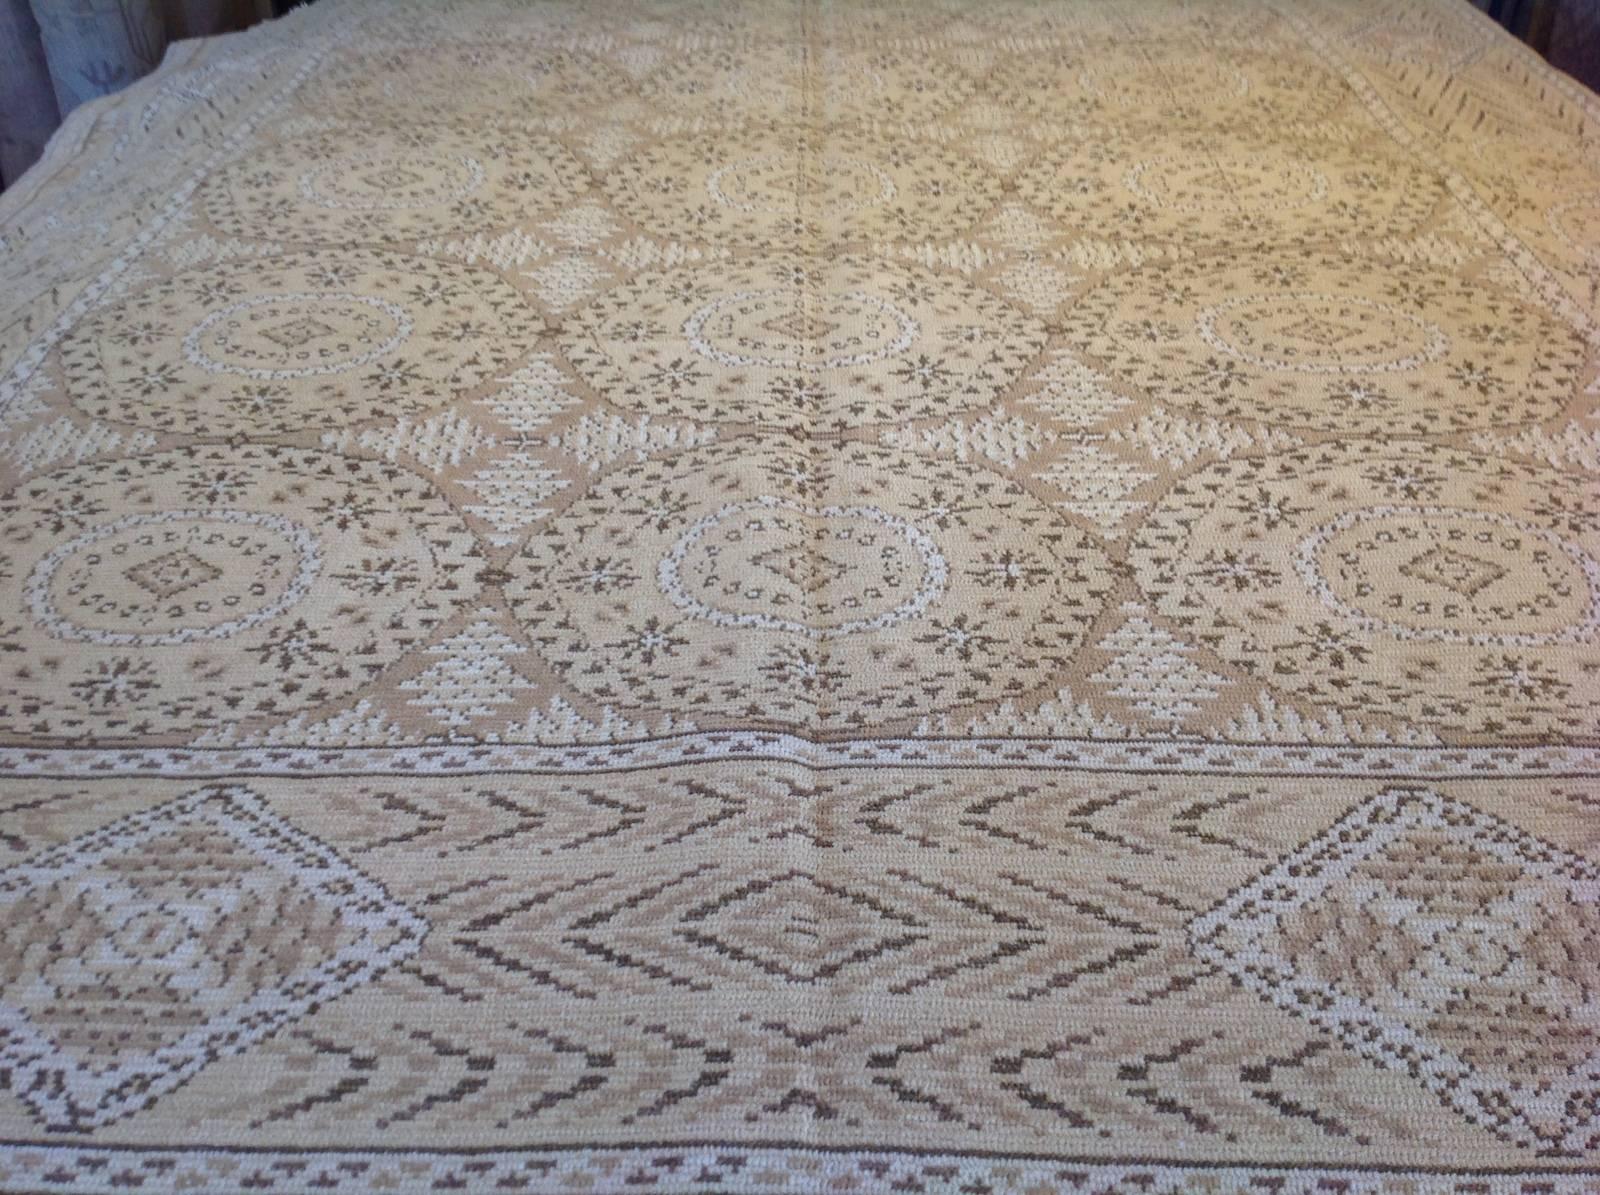 Geometric floral European rug
Colors: tan, cream, dark brown.